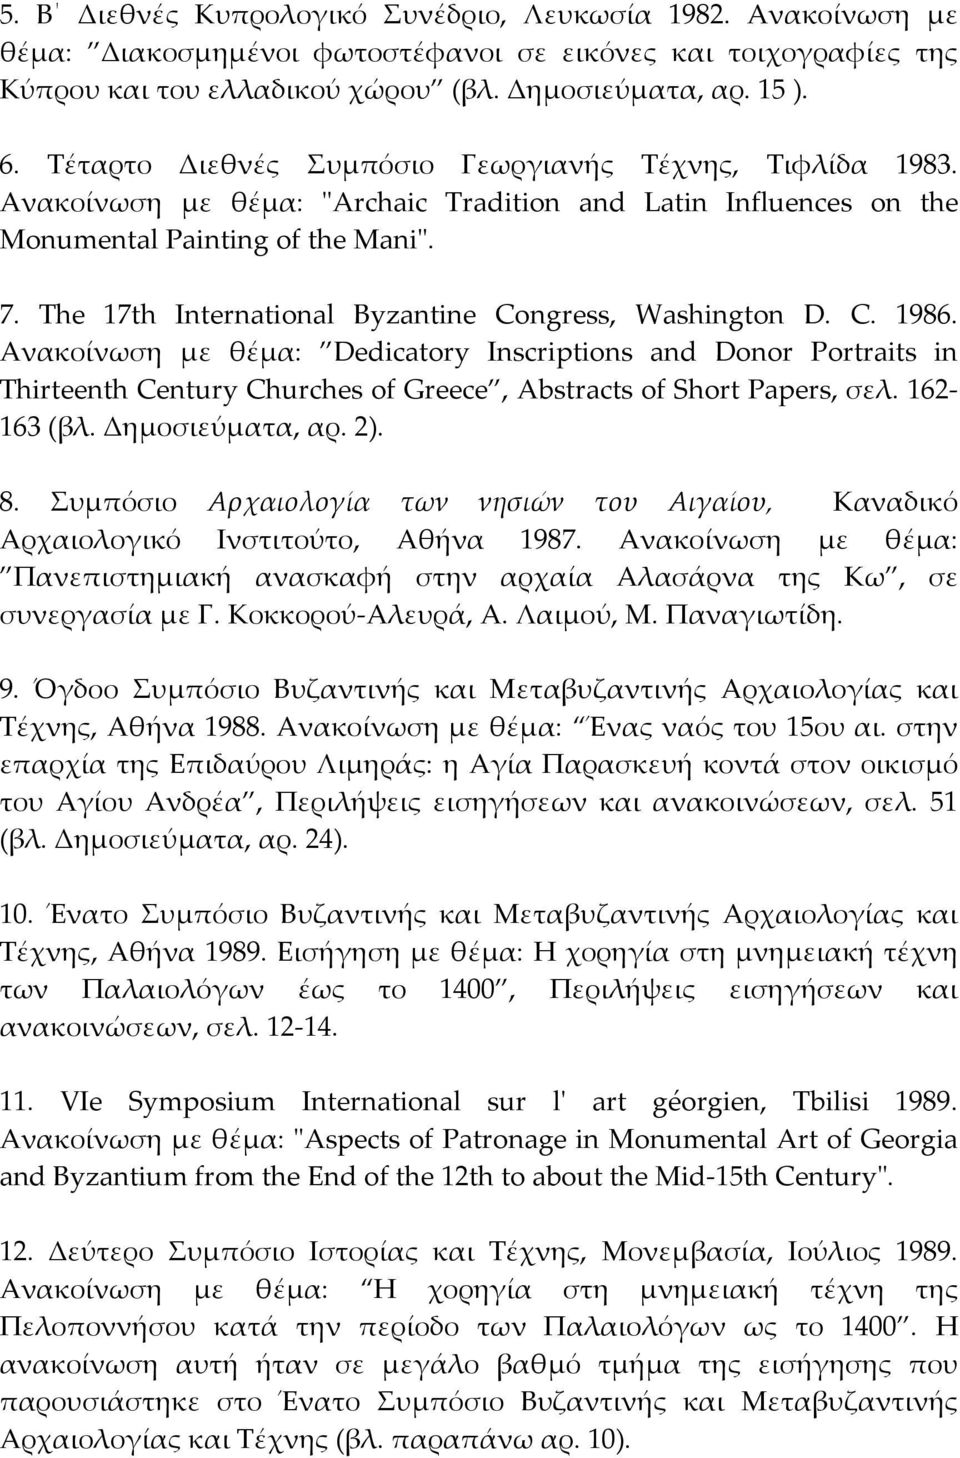 The 17th International Byzantine Congress, Washington D. C. 1986.